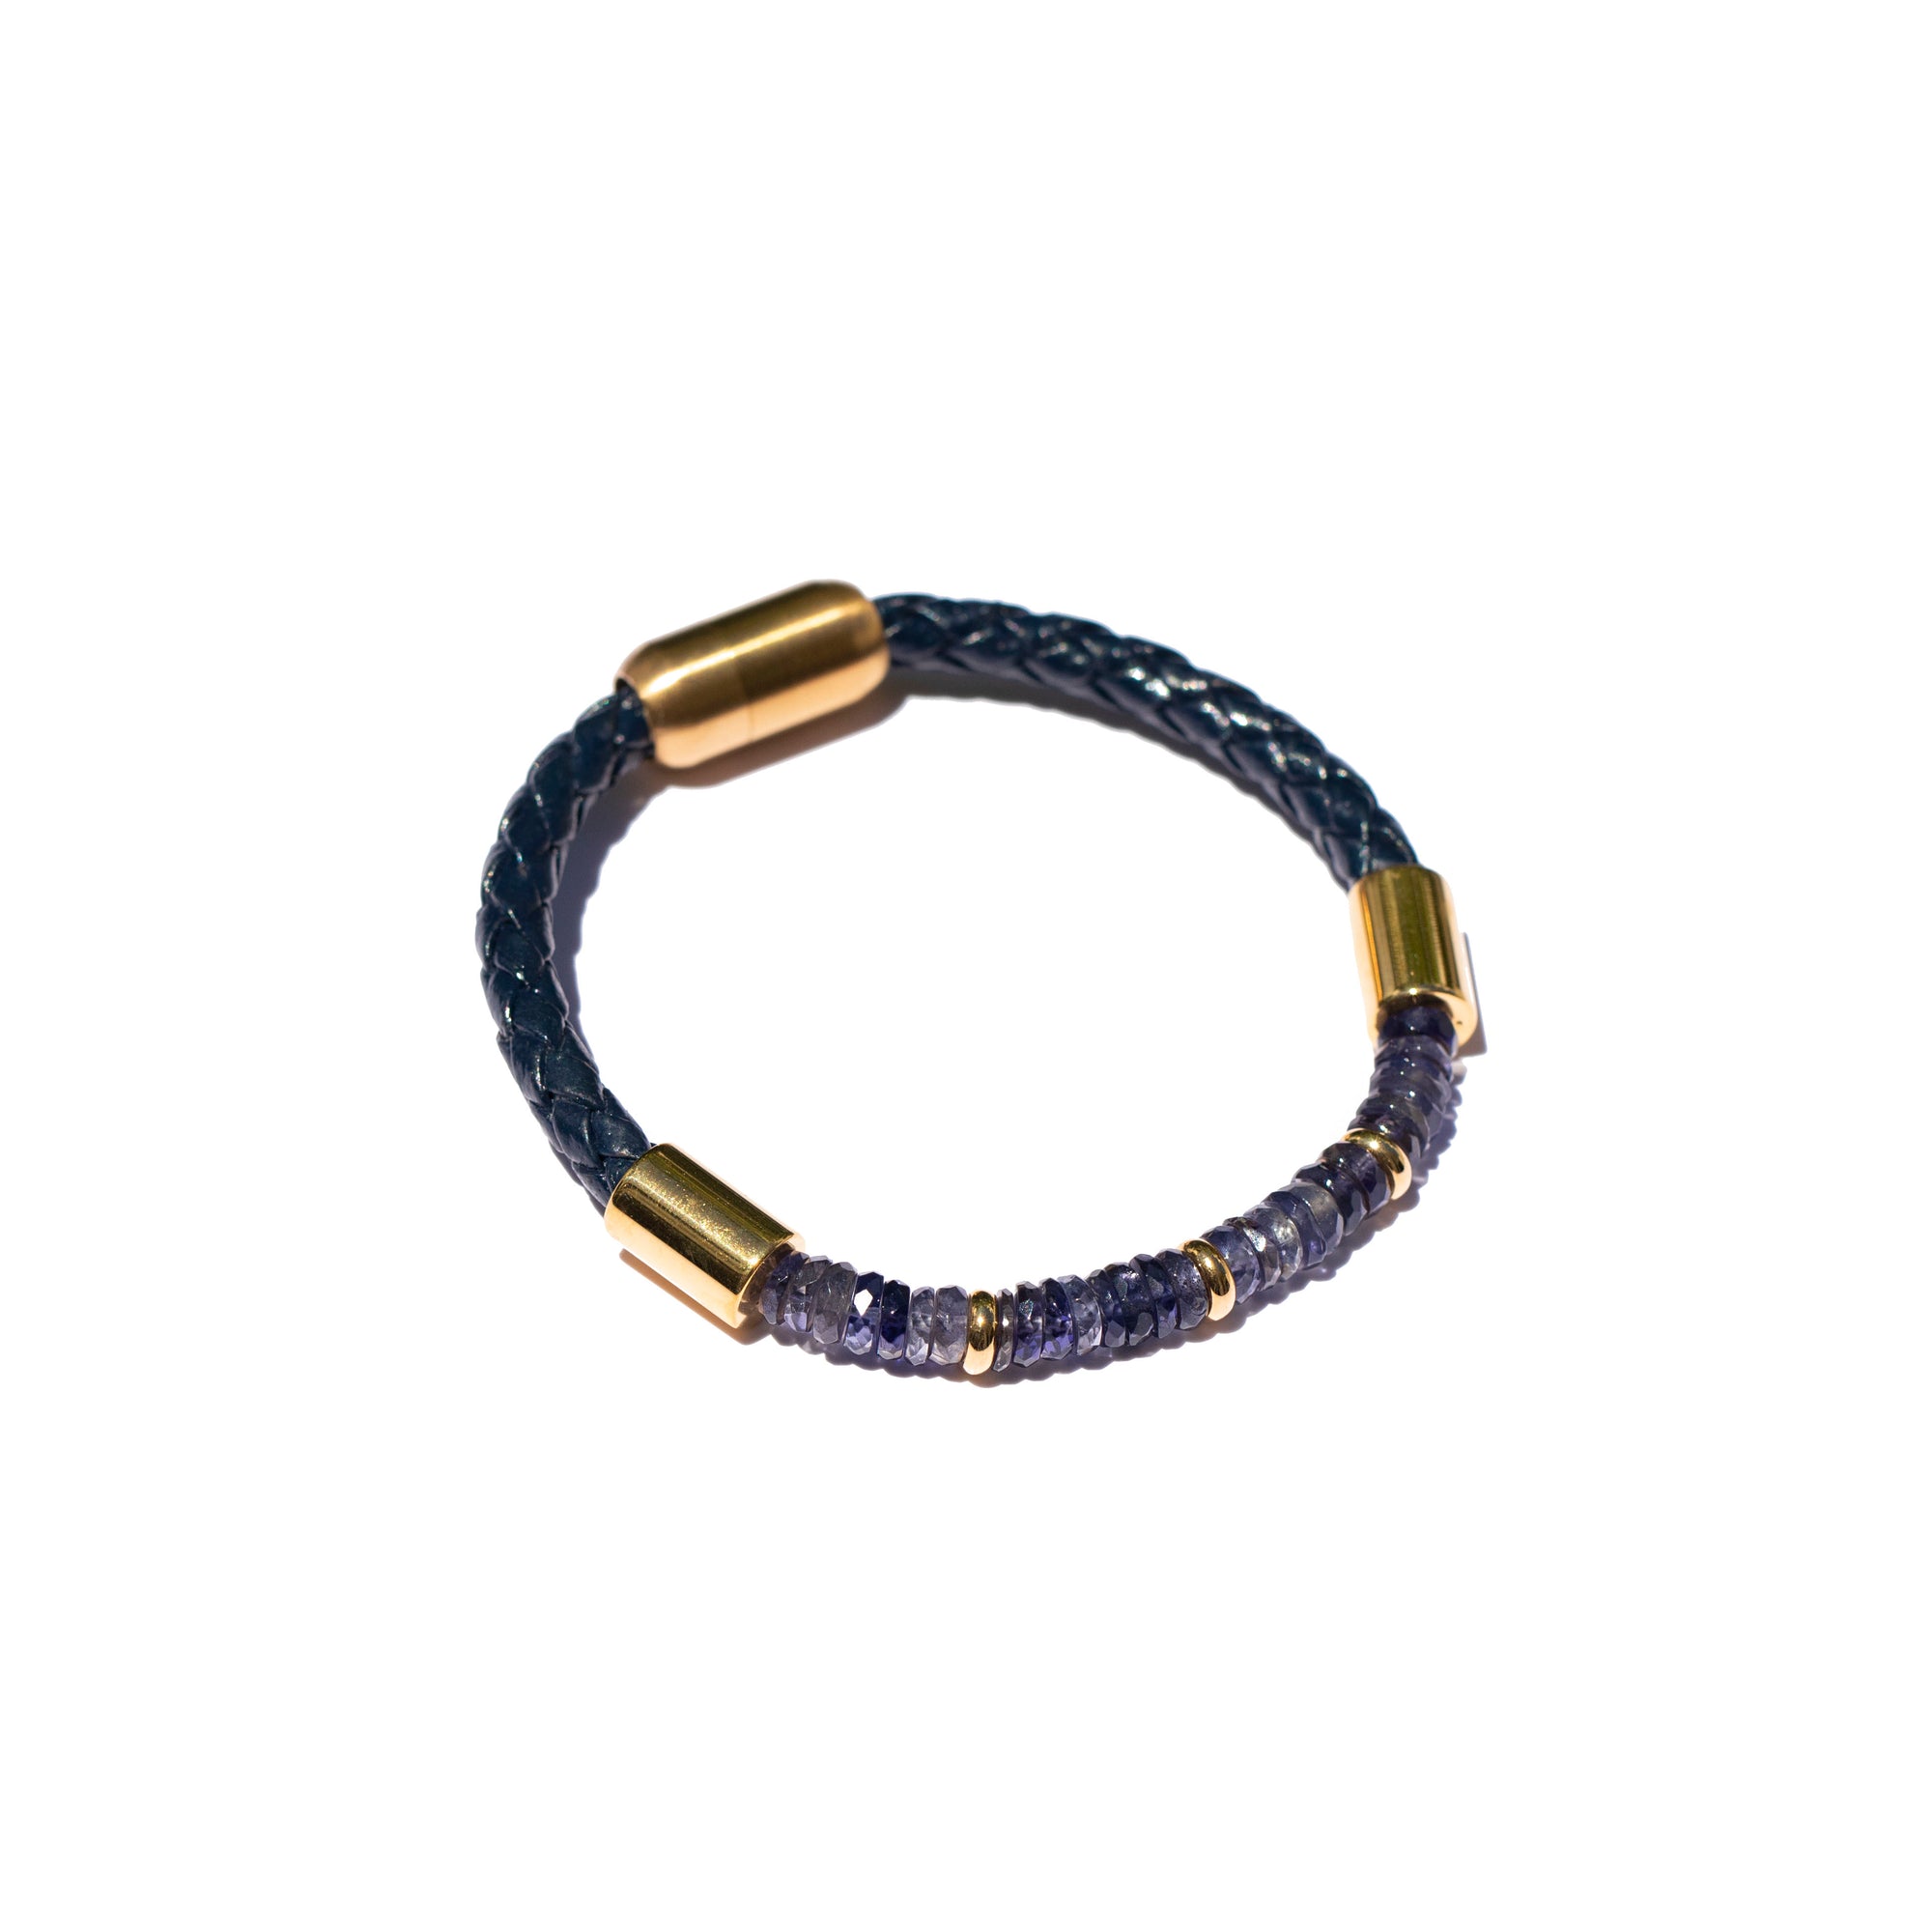 Storyteller Collection: Iolite "Water Sapphire", 24K Gold Vermeil & Leather Bracelet